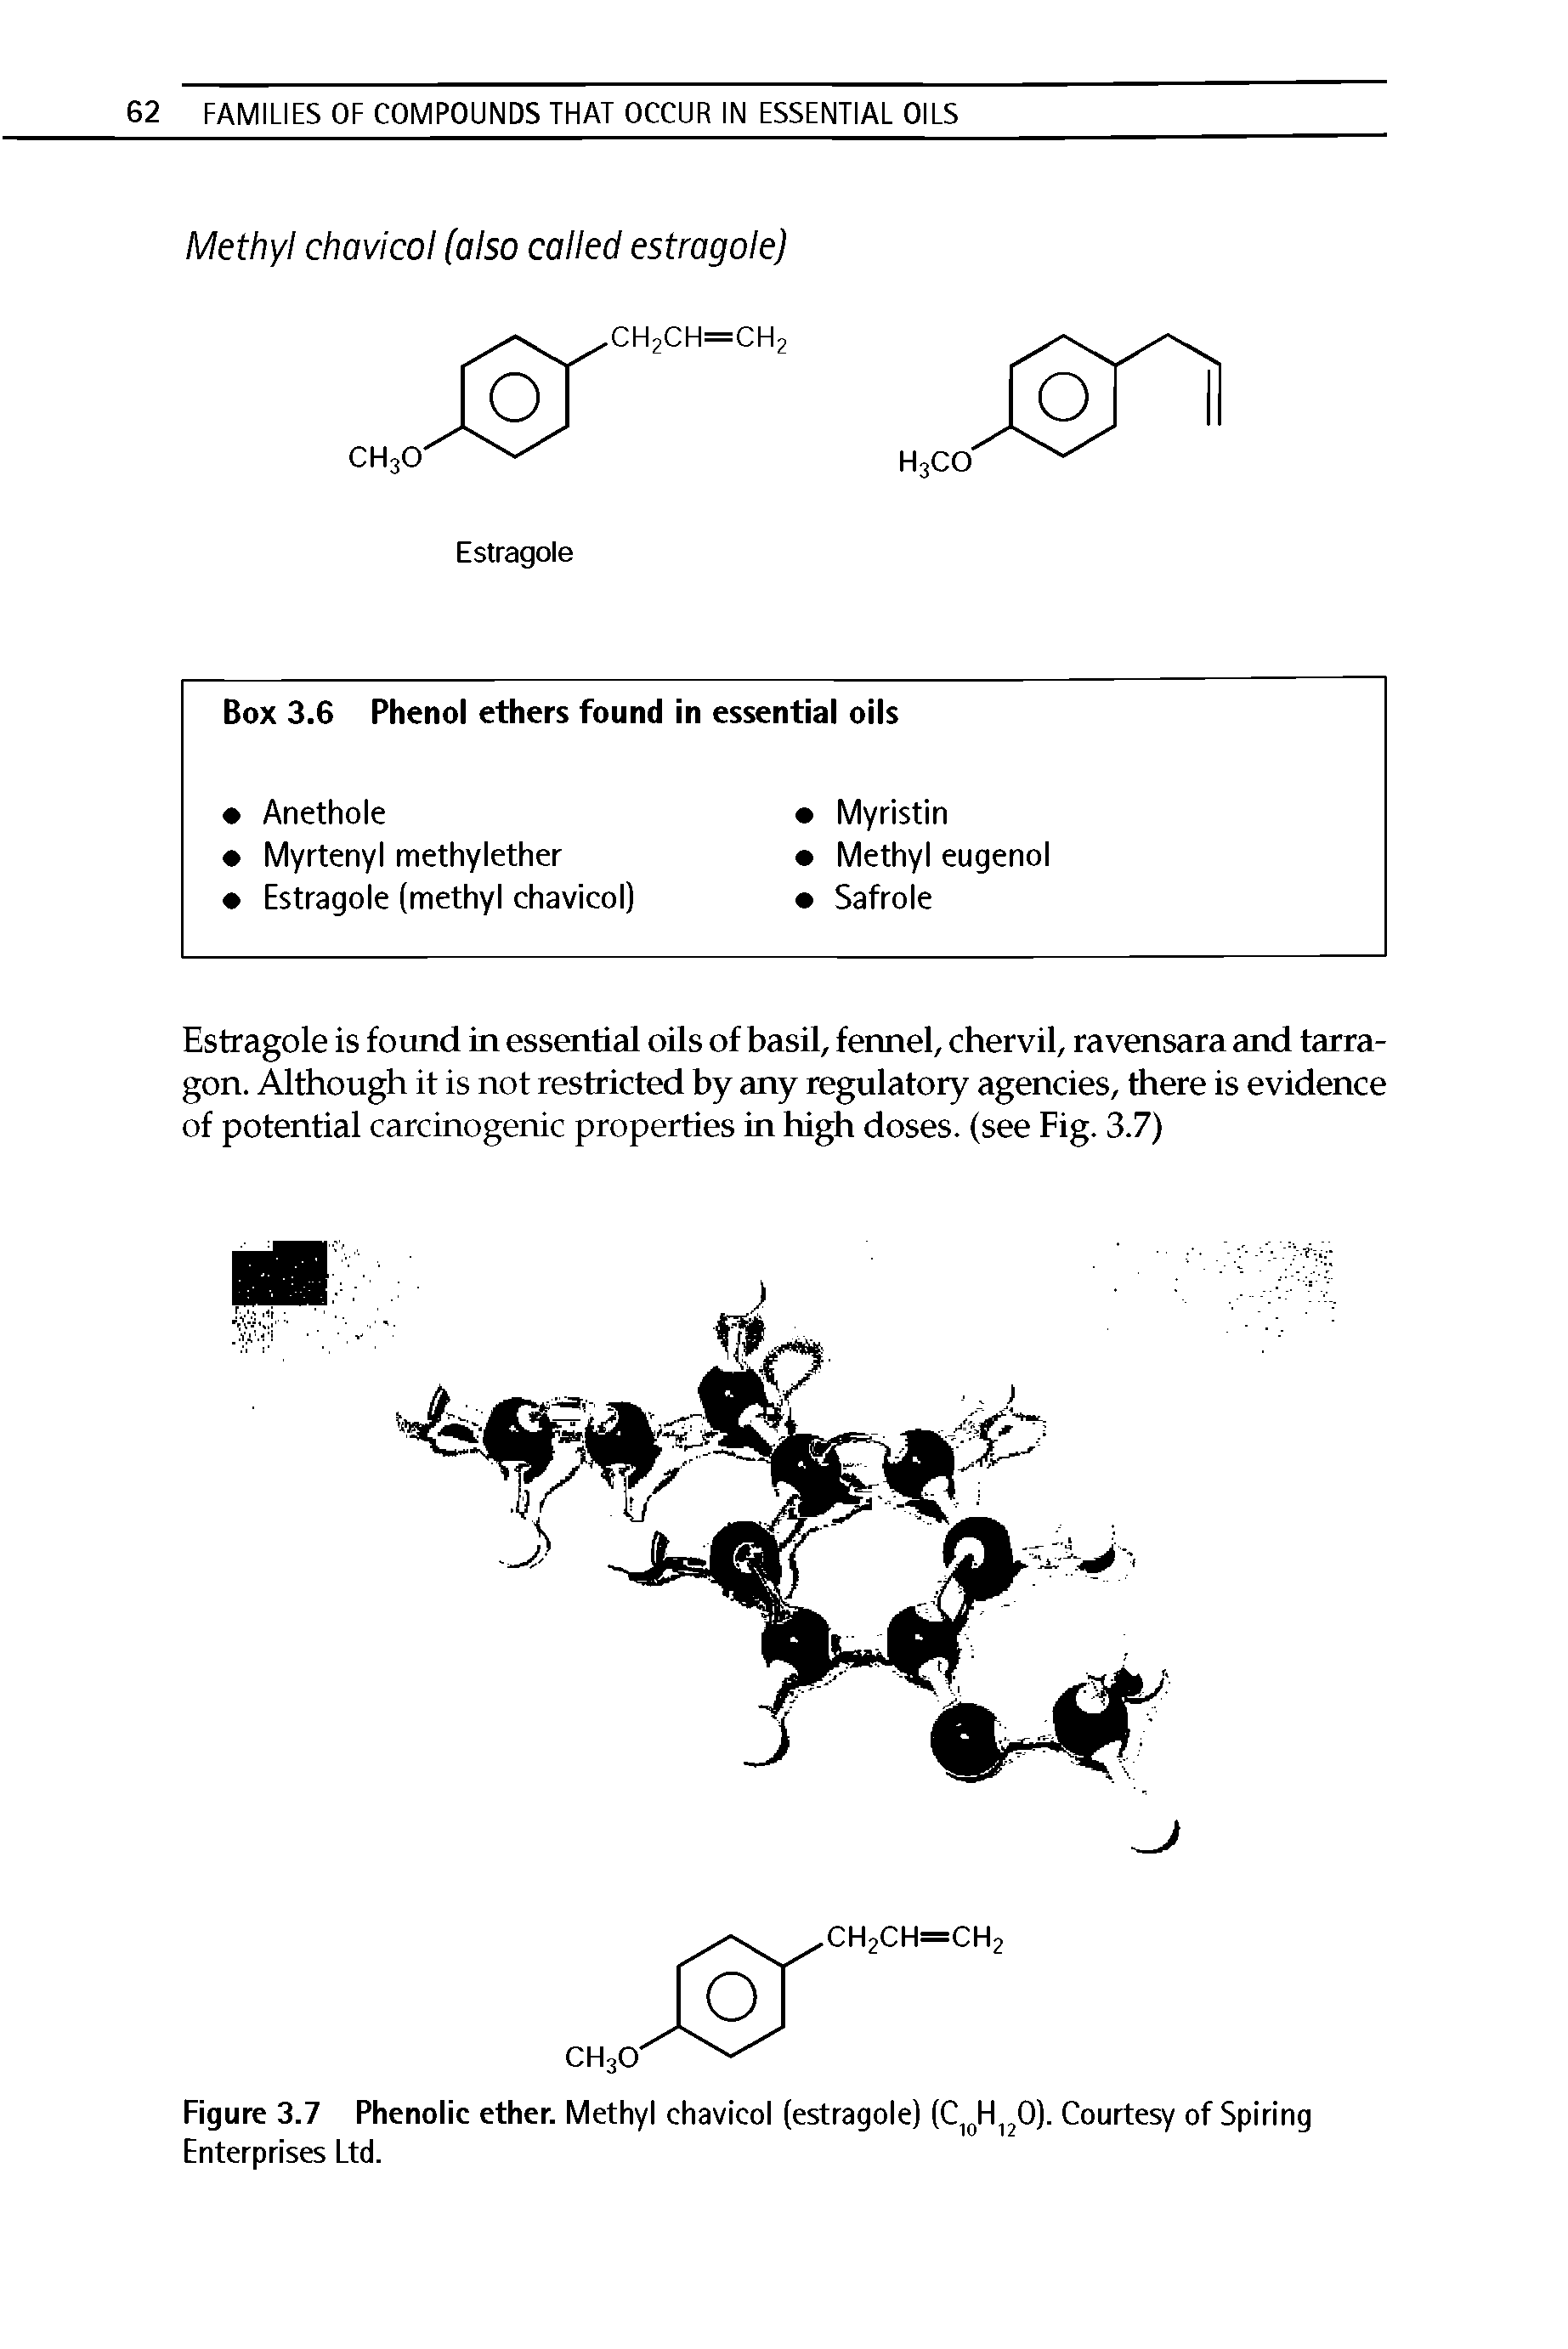 Figure 3.7 Phenolic ether. Methyl chavicol (estragole) (C]0H]20). Courtesy of Spiring Enterprises Ltd.